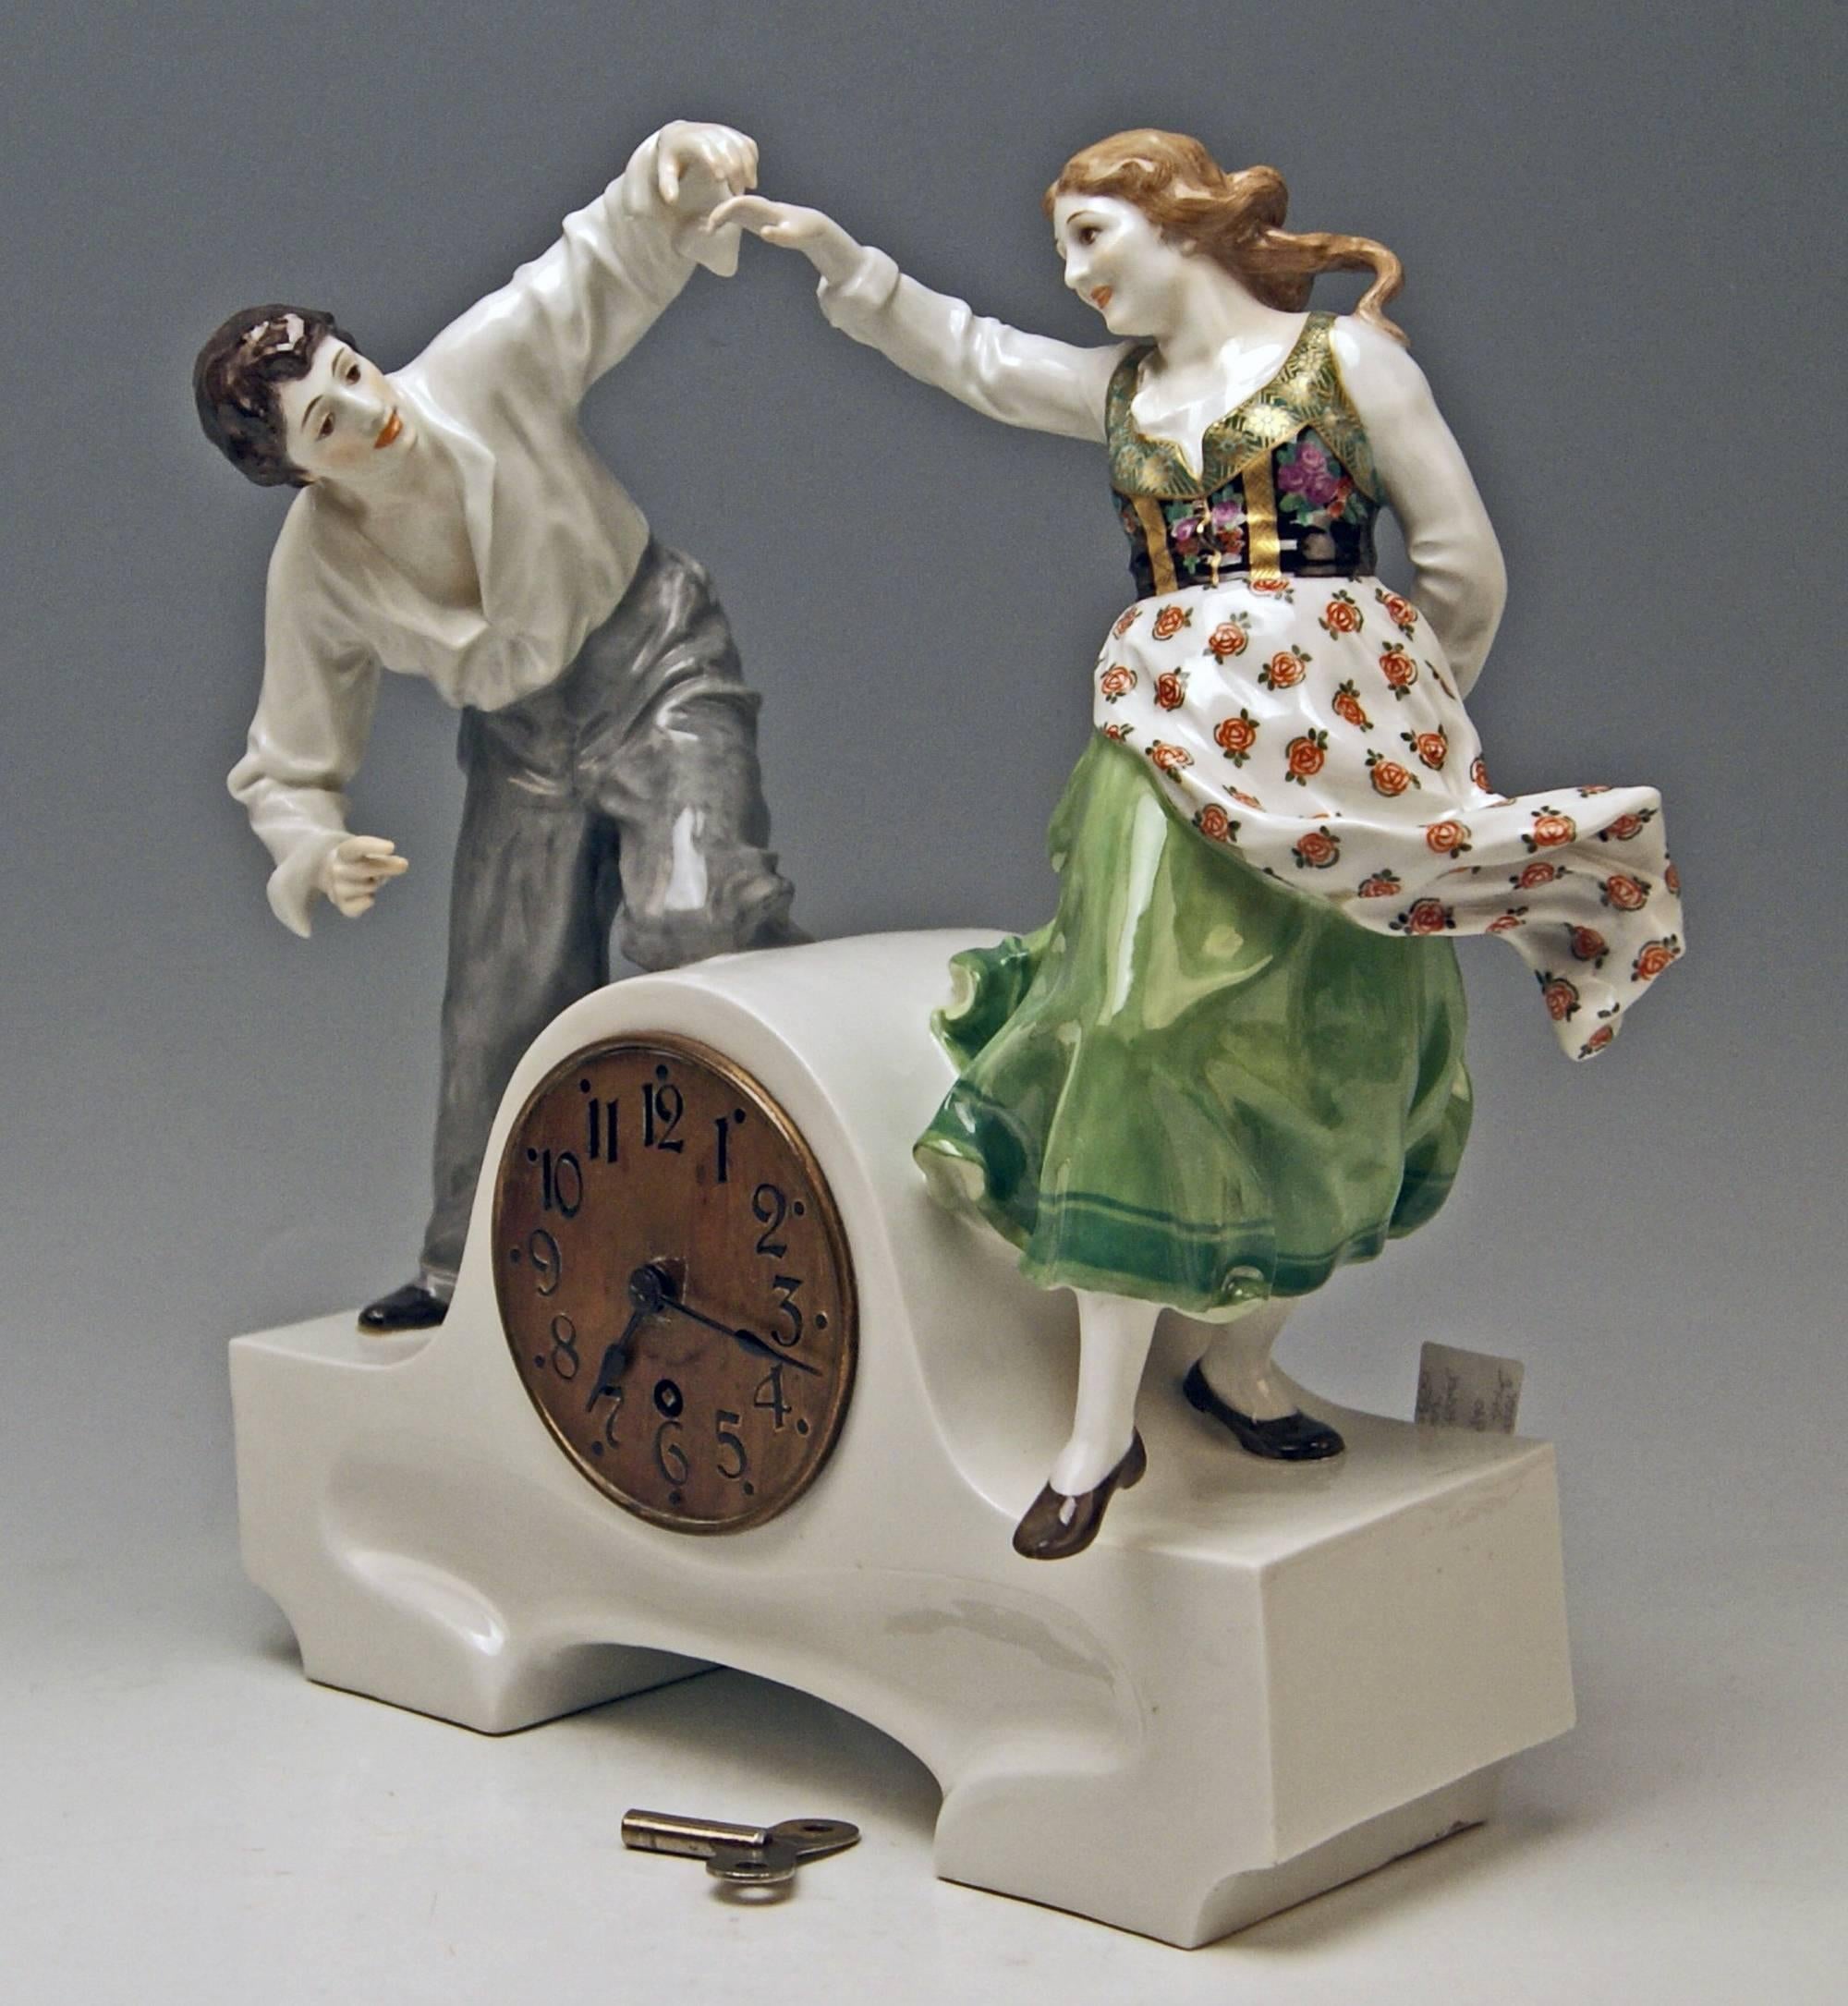 Gorgeous Art Nouveau mantle table clock with dancing couple

Manufactory: Meissen
Dating: circa 1910
Material: white porcelain, glossy finish, finest painting

Designer / modeller: 
Julius Konrad Hentschel (Cologne 1872 - Meissen 1907) 
He studied